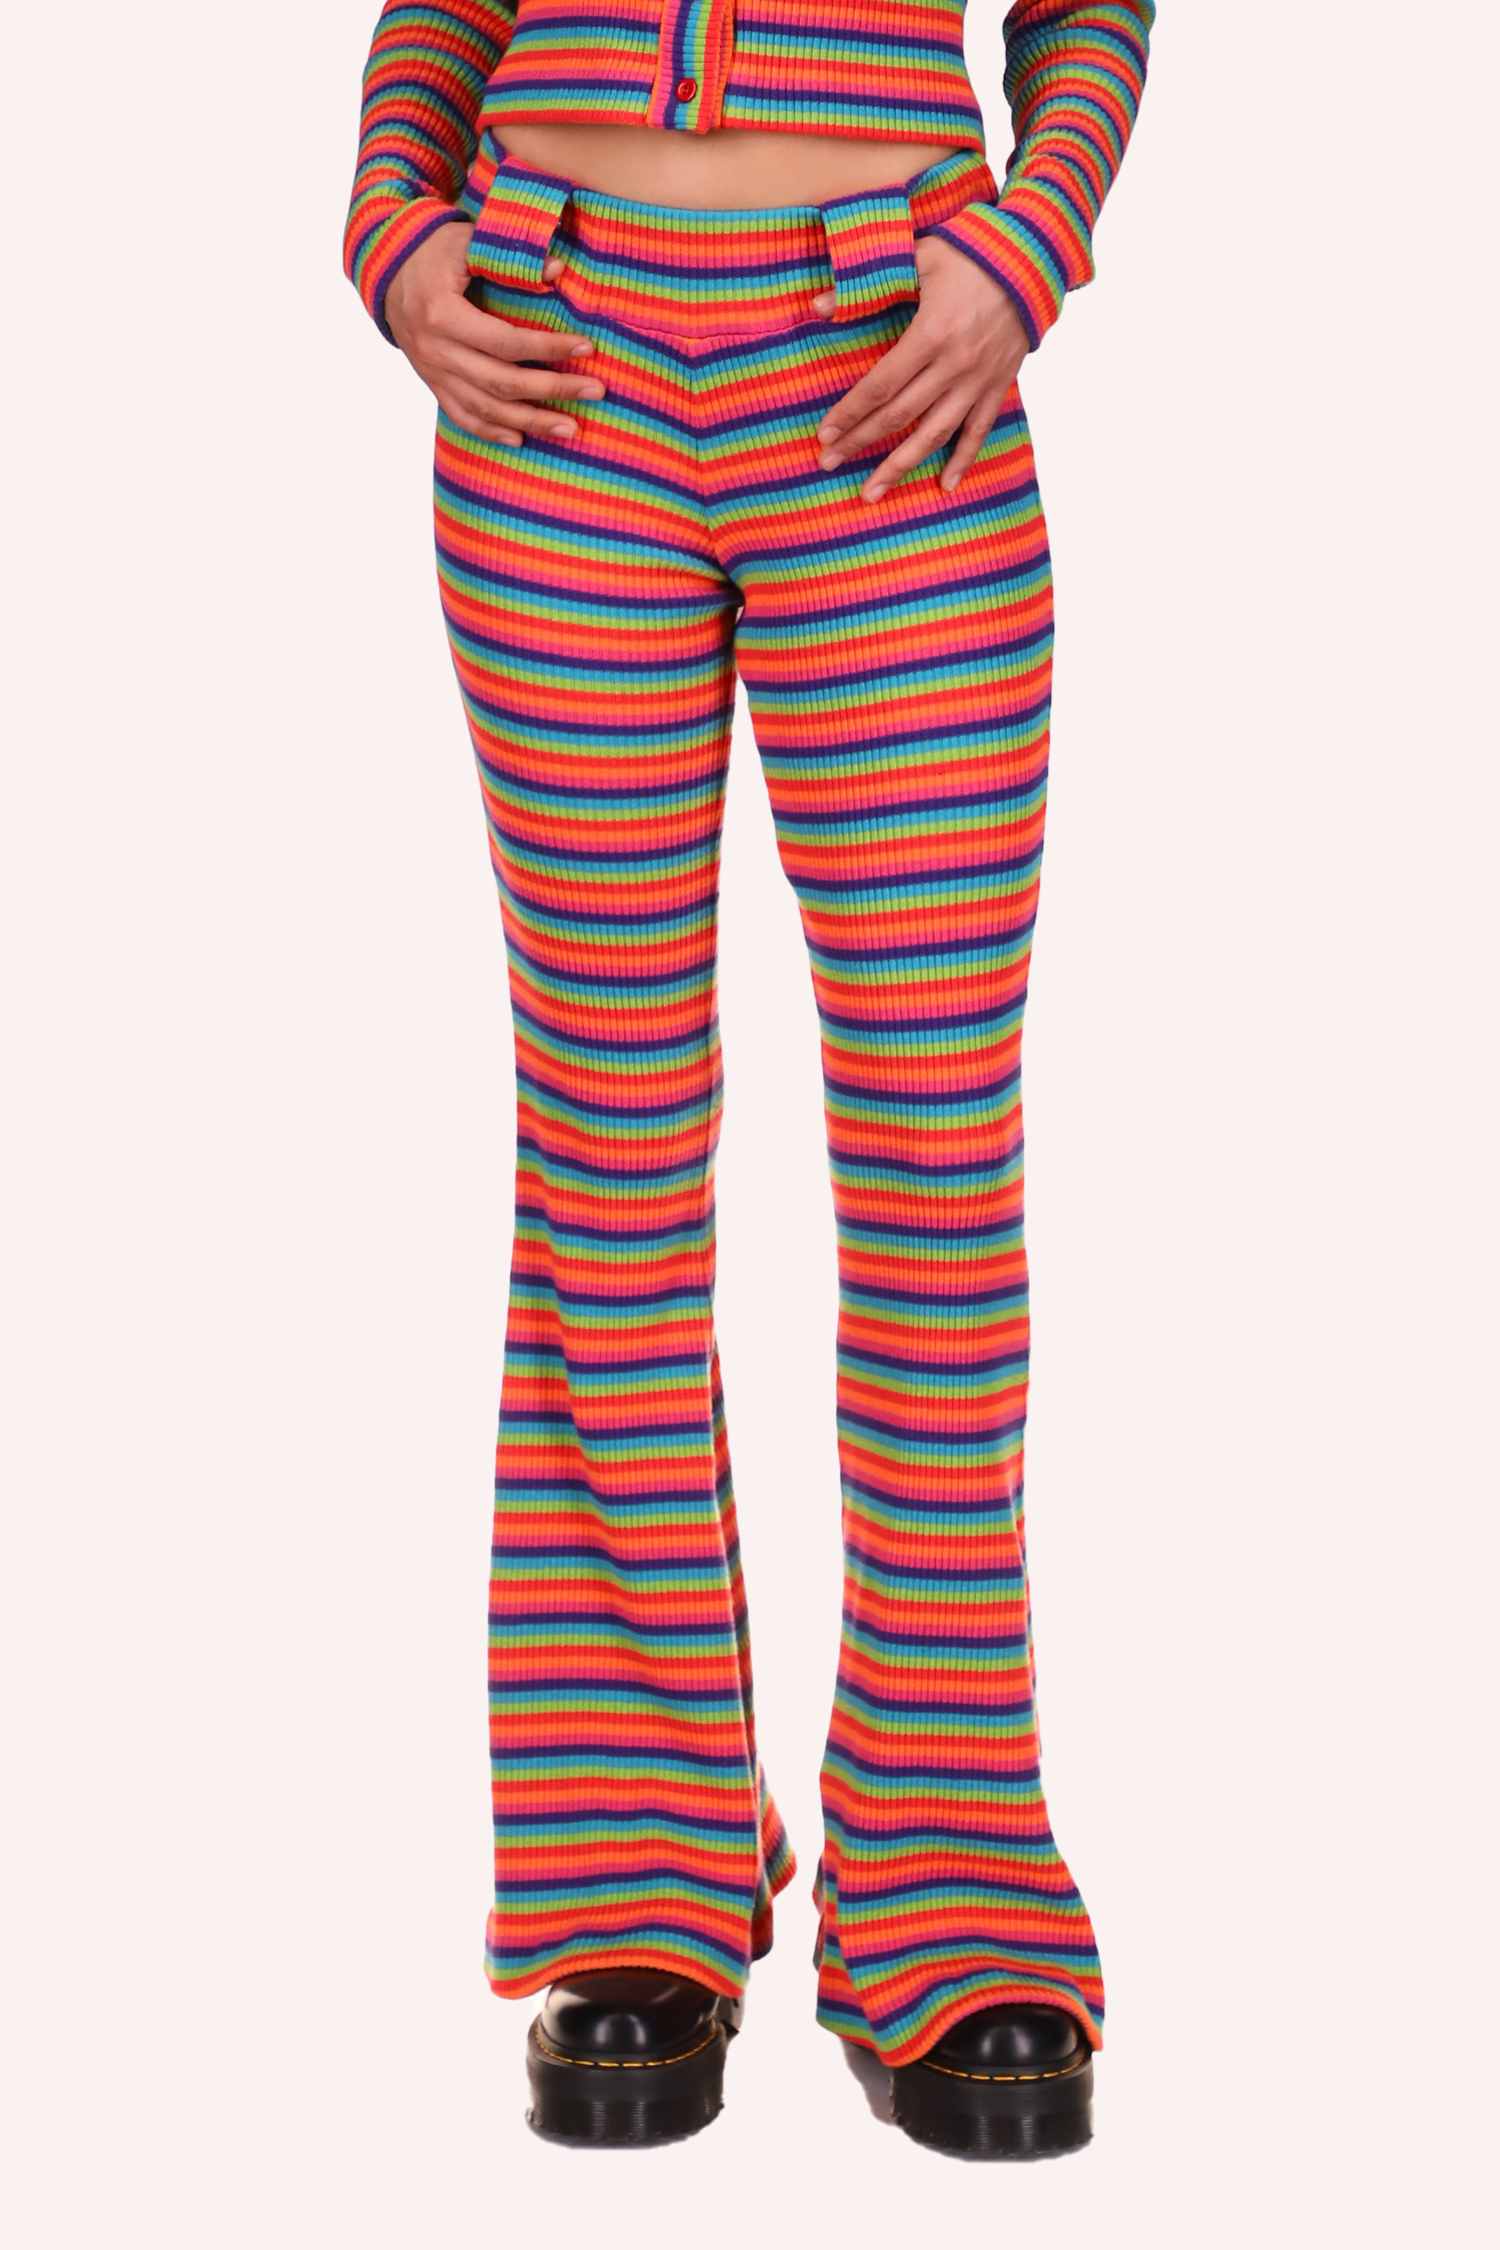 Pantalones de arco iris - Anna Sui